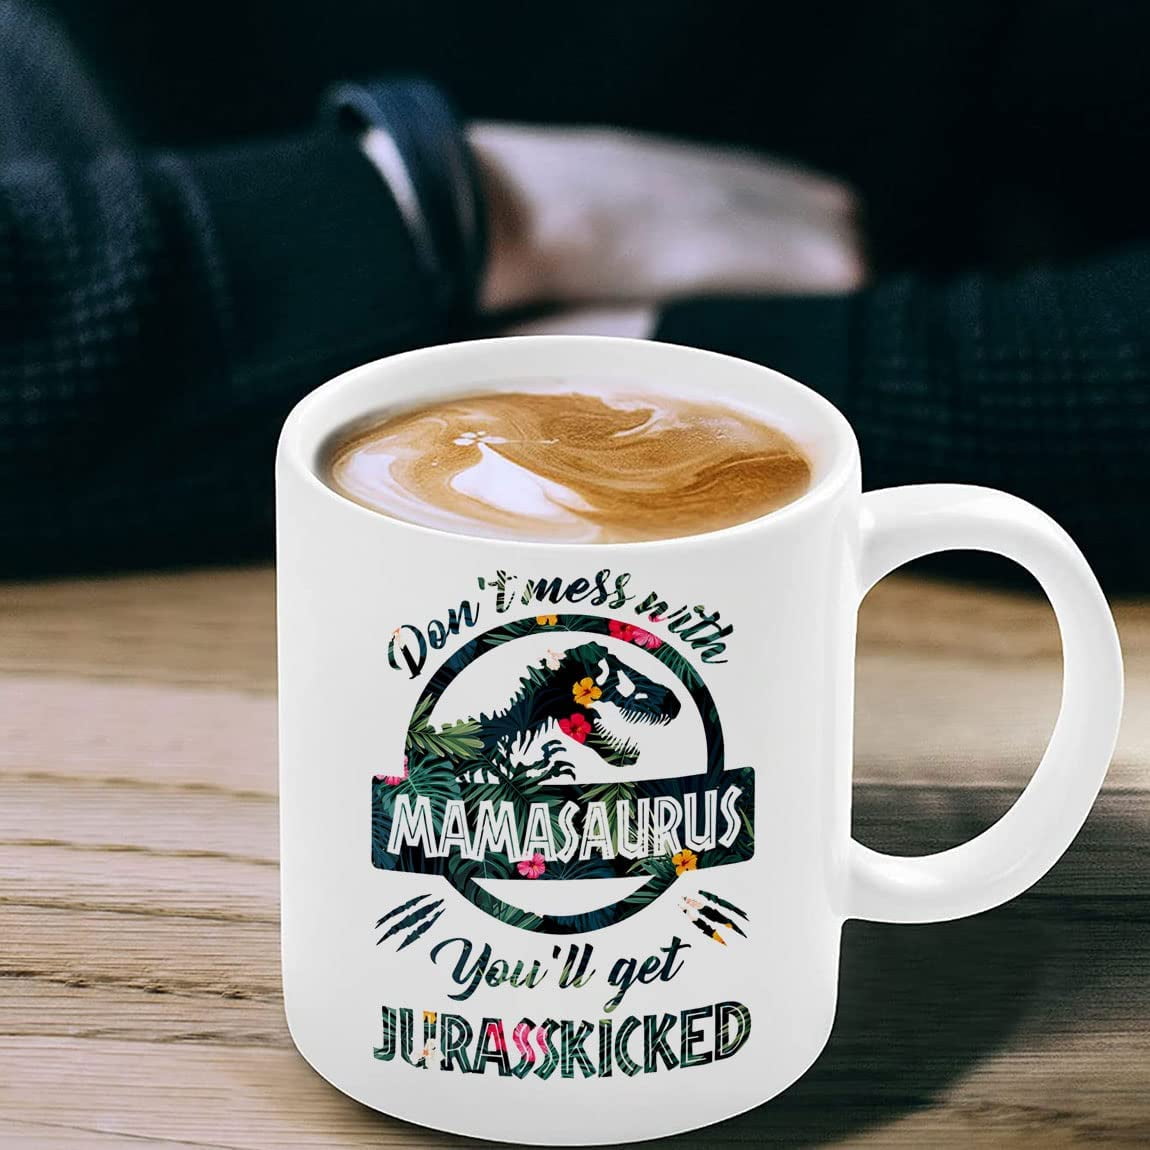 Mamasaurus Mug, Don't Mess With Mamasaurus You'll Get Jurasskicked Coffee  Mug, Dinosaur Mug, Dinosaur Mug 